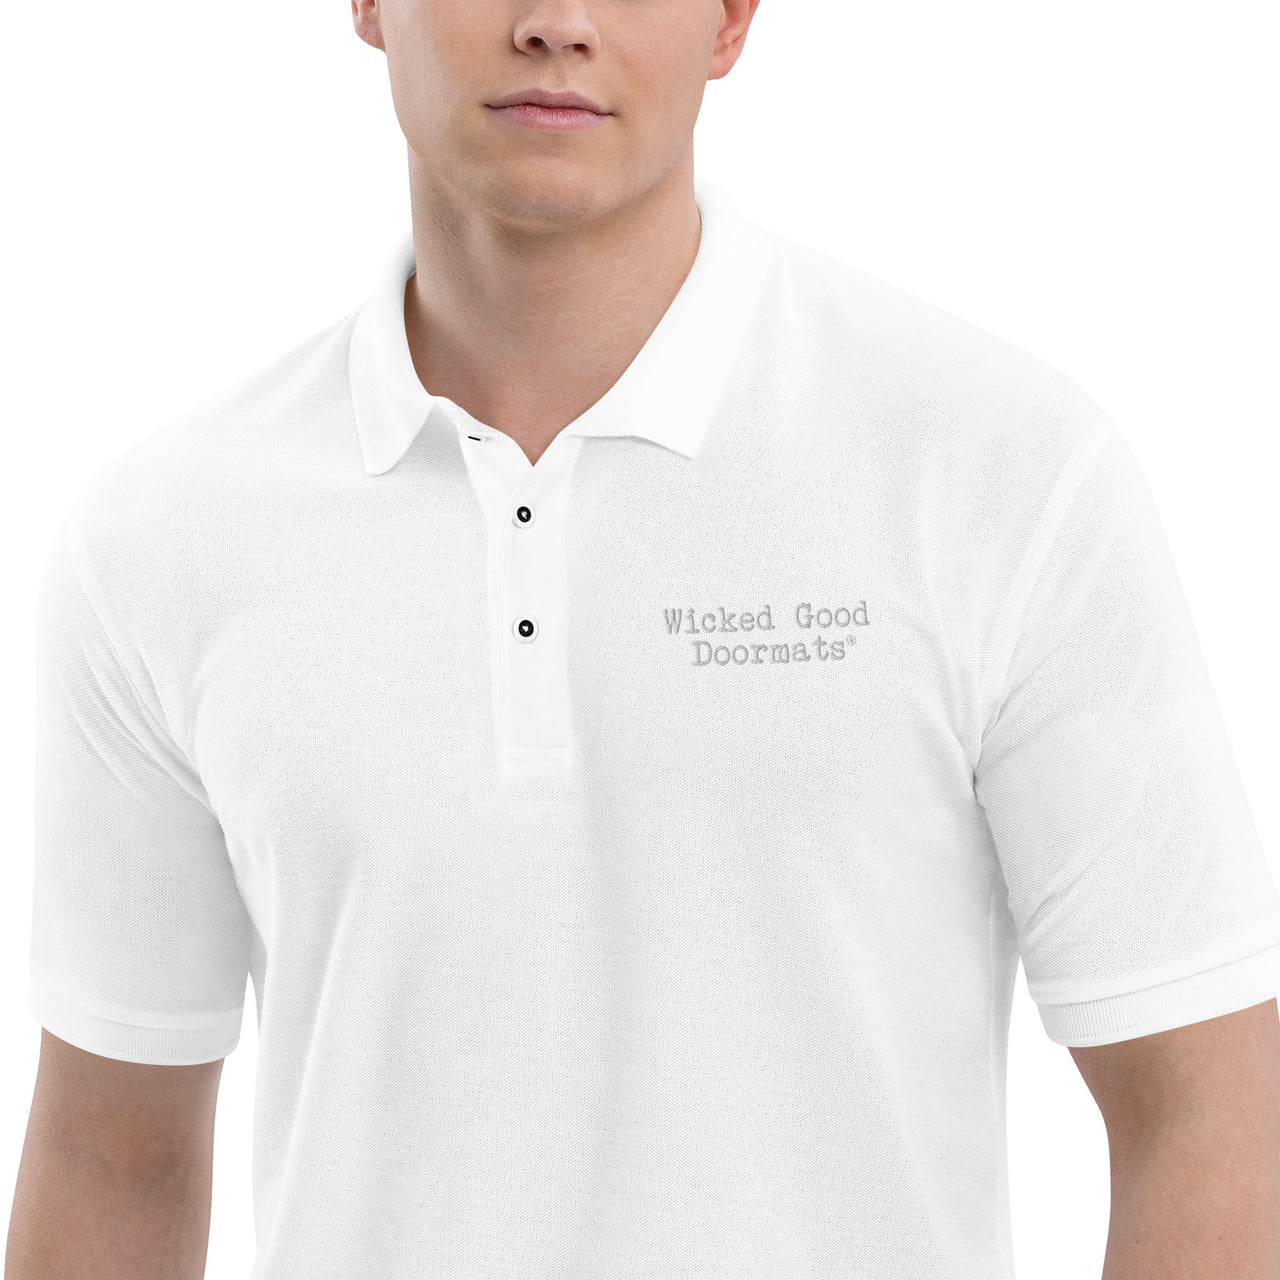 Men's Premium Polo Shirts & Tops New England Trading Co White S 